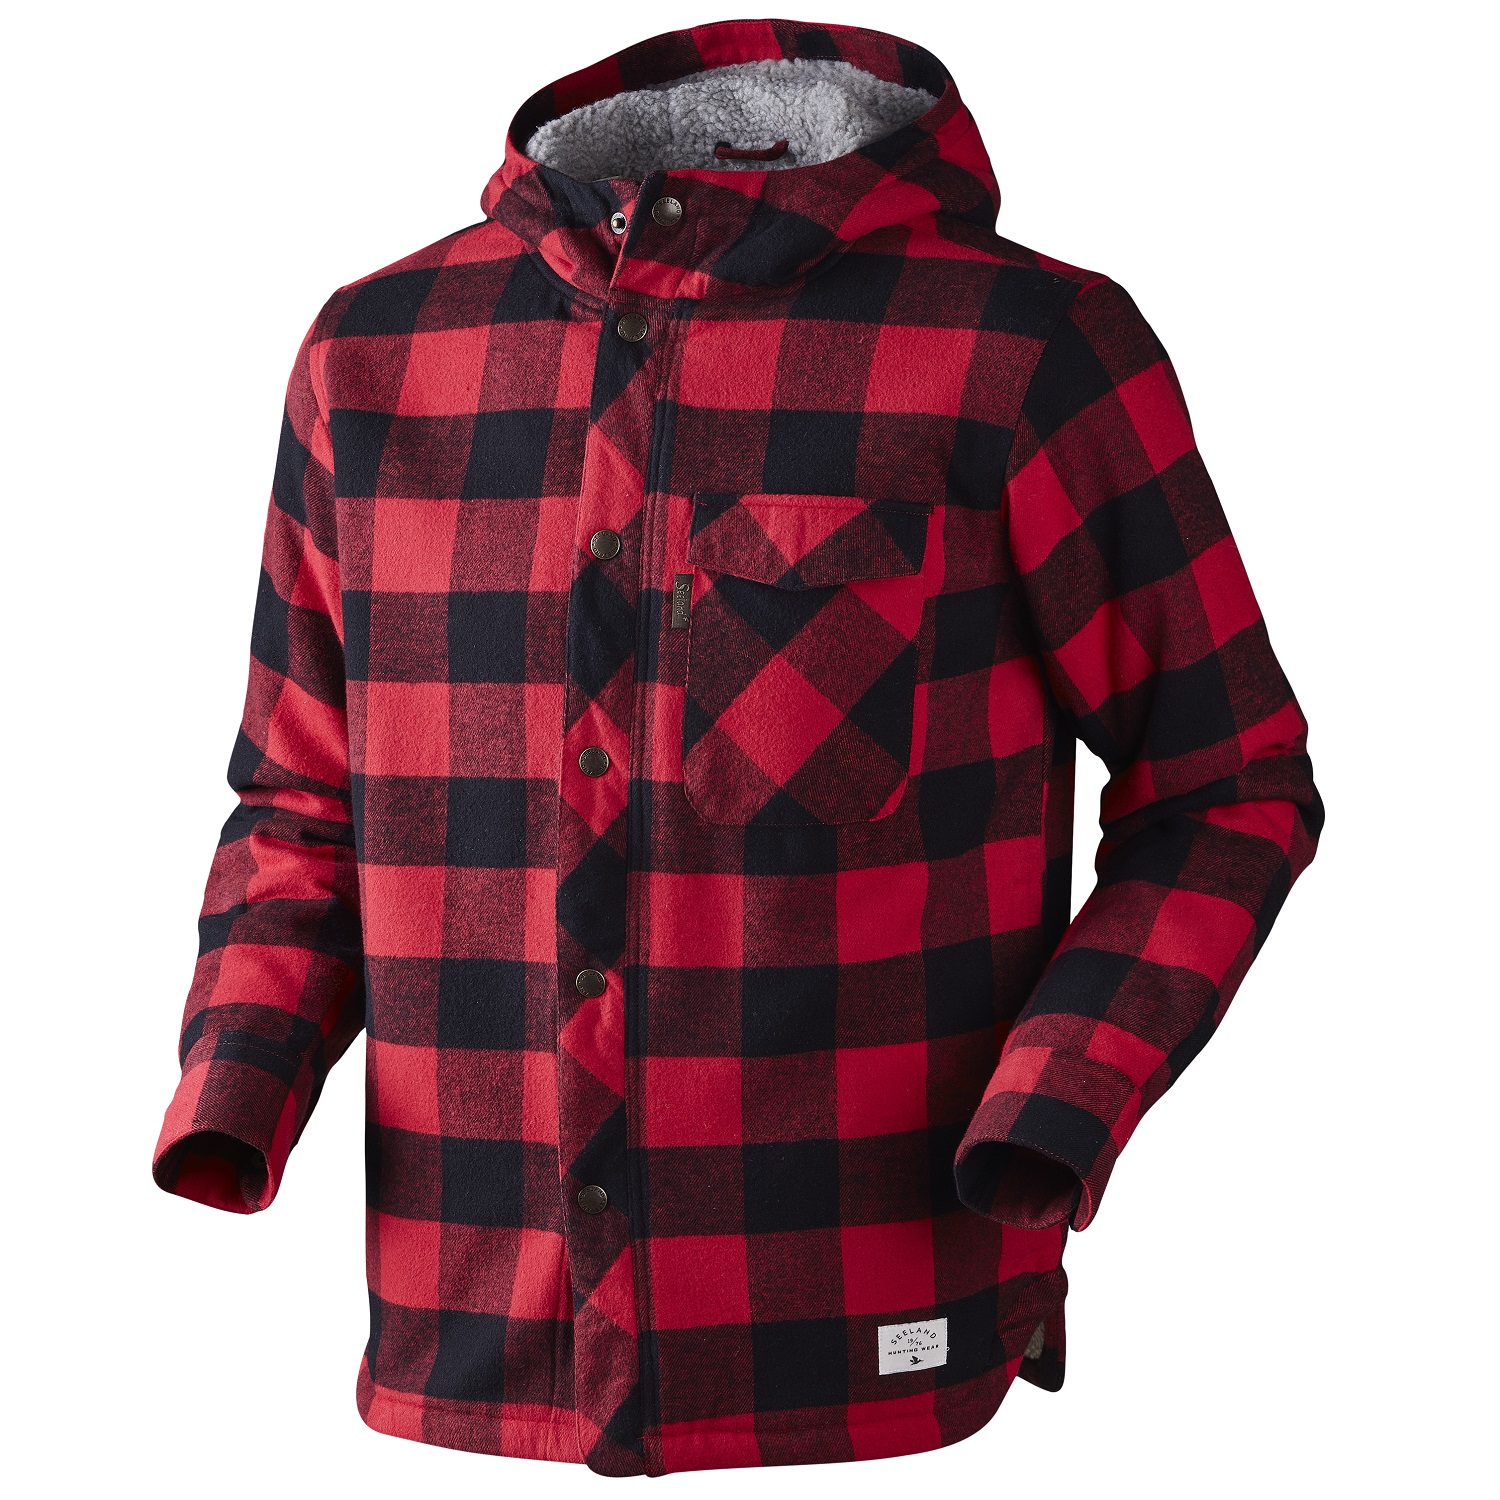 Seeland Canada Jacket Lumber